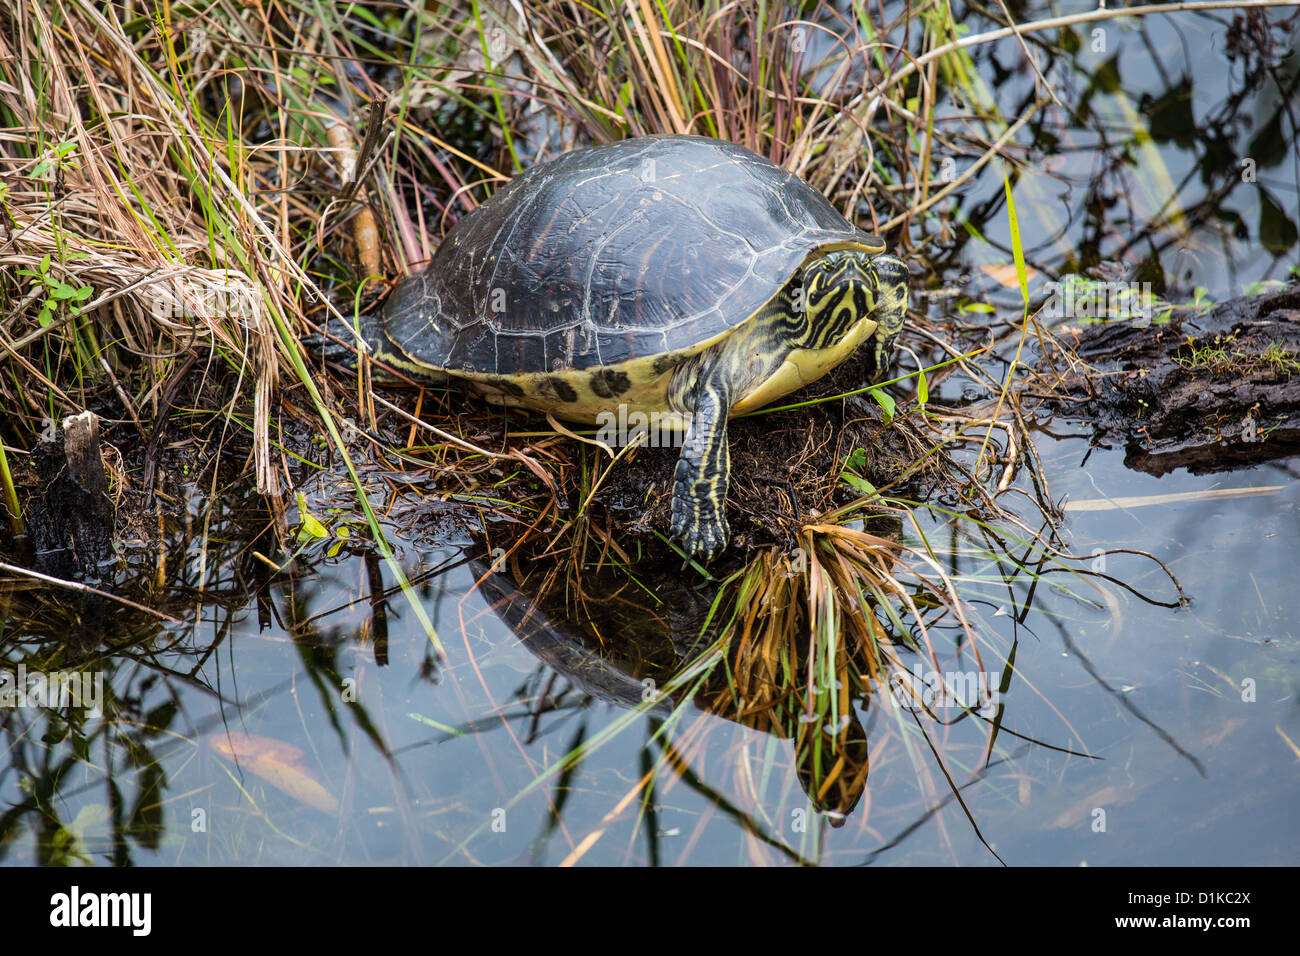 Turtle, Florida Everglades National Park Stock Photo